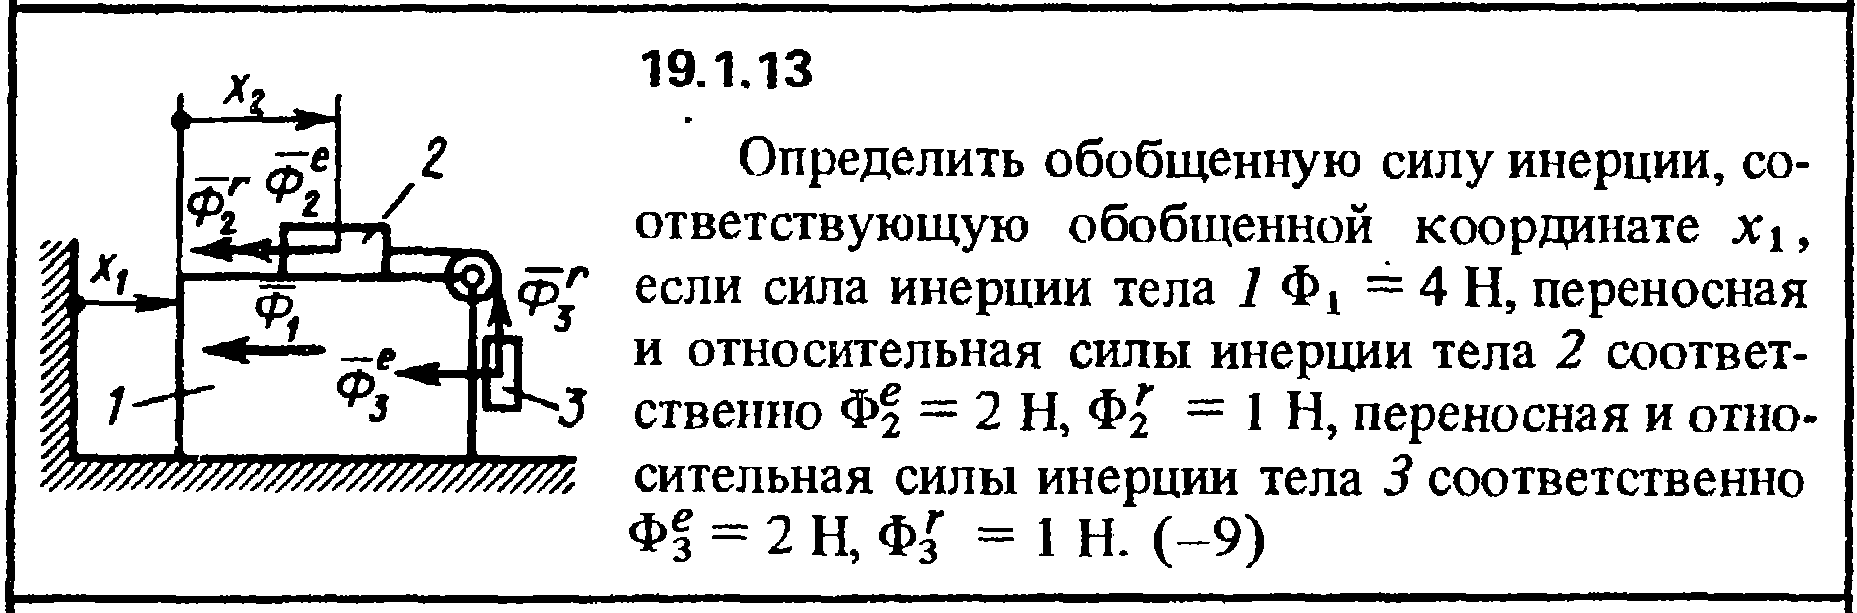 Решение 19.1.13 из сборника (решебника) Кепе О.Е. 1989